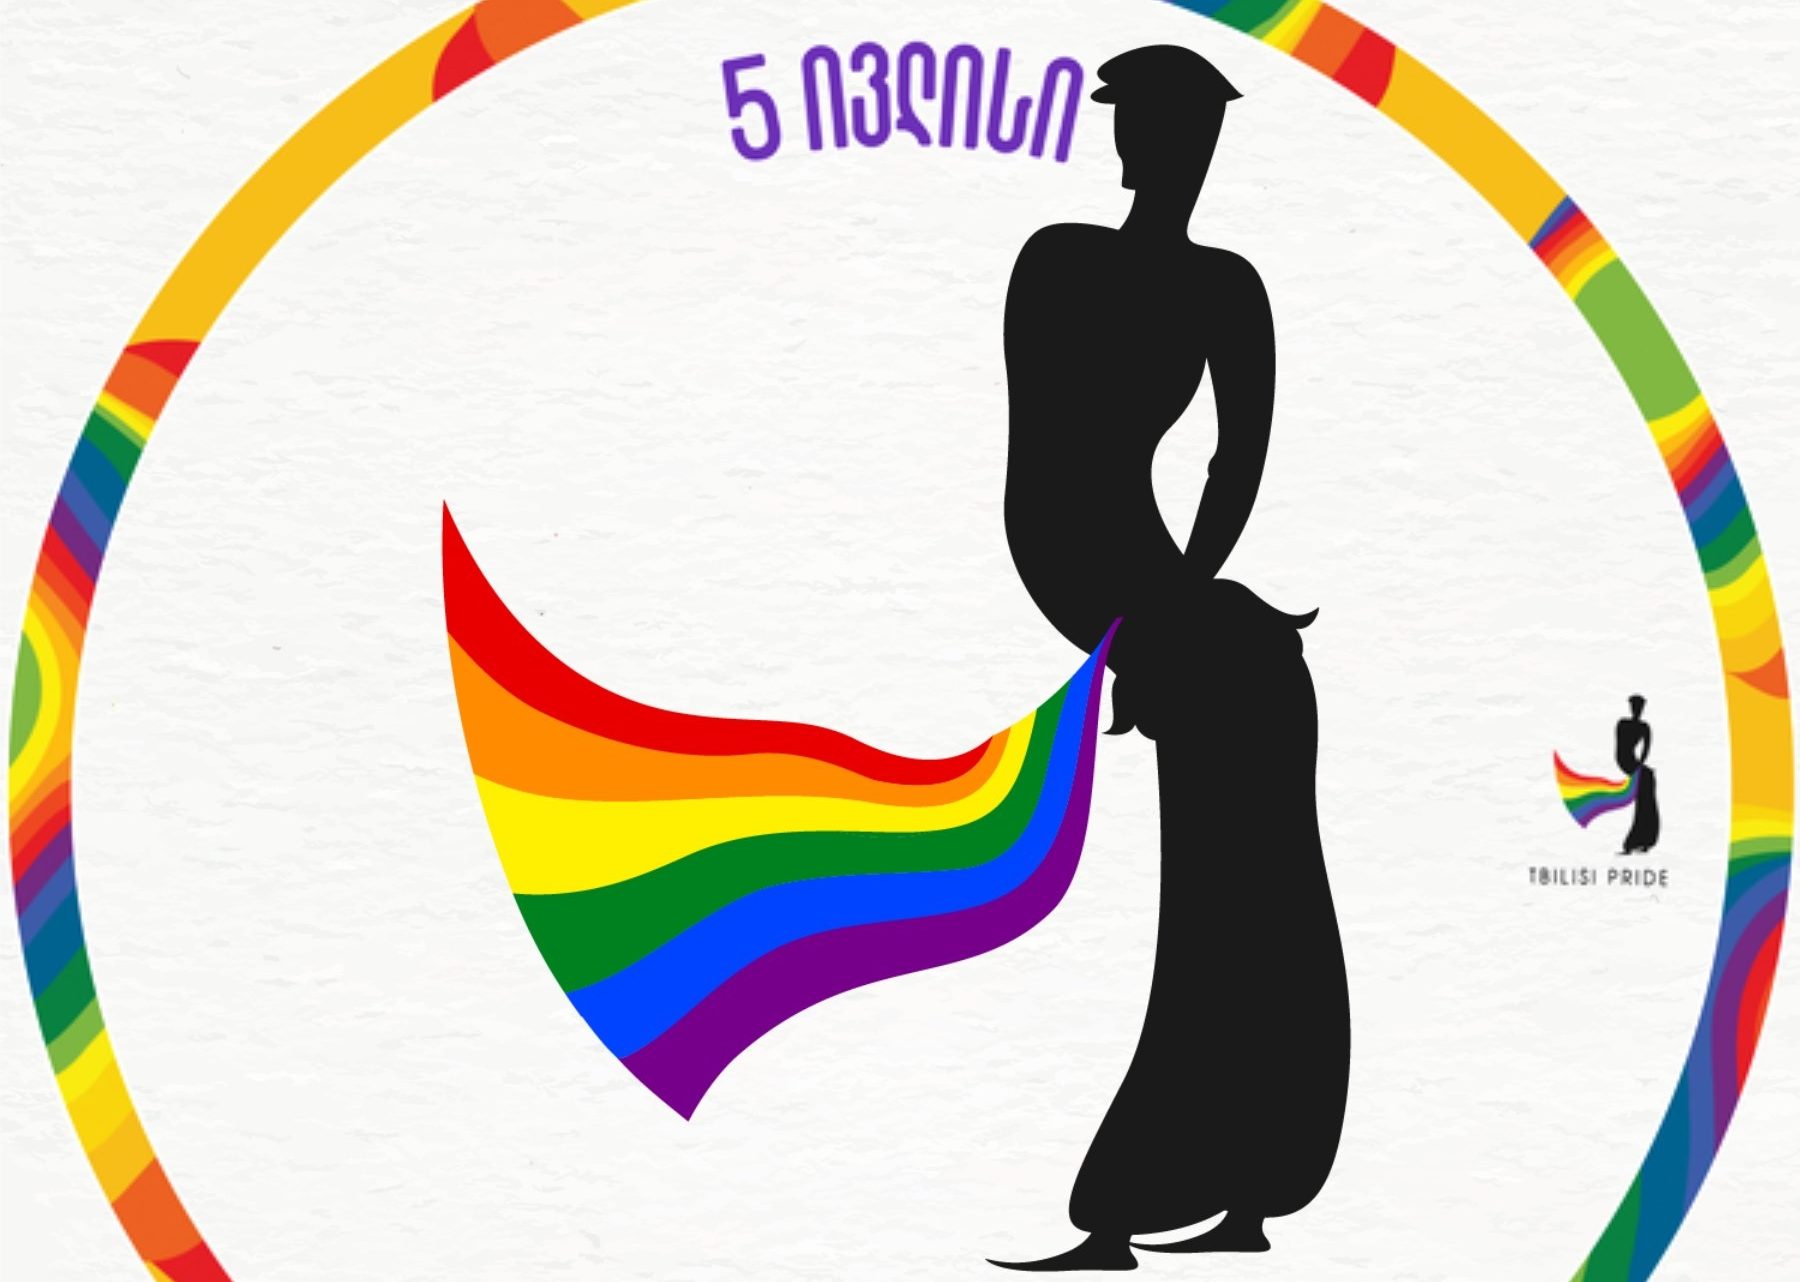 tbilisi pride e1625465978777 политика 5 июля, Tbilisi Pride, АМЮГ, ЛГБТ